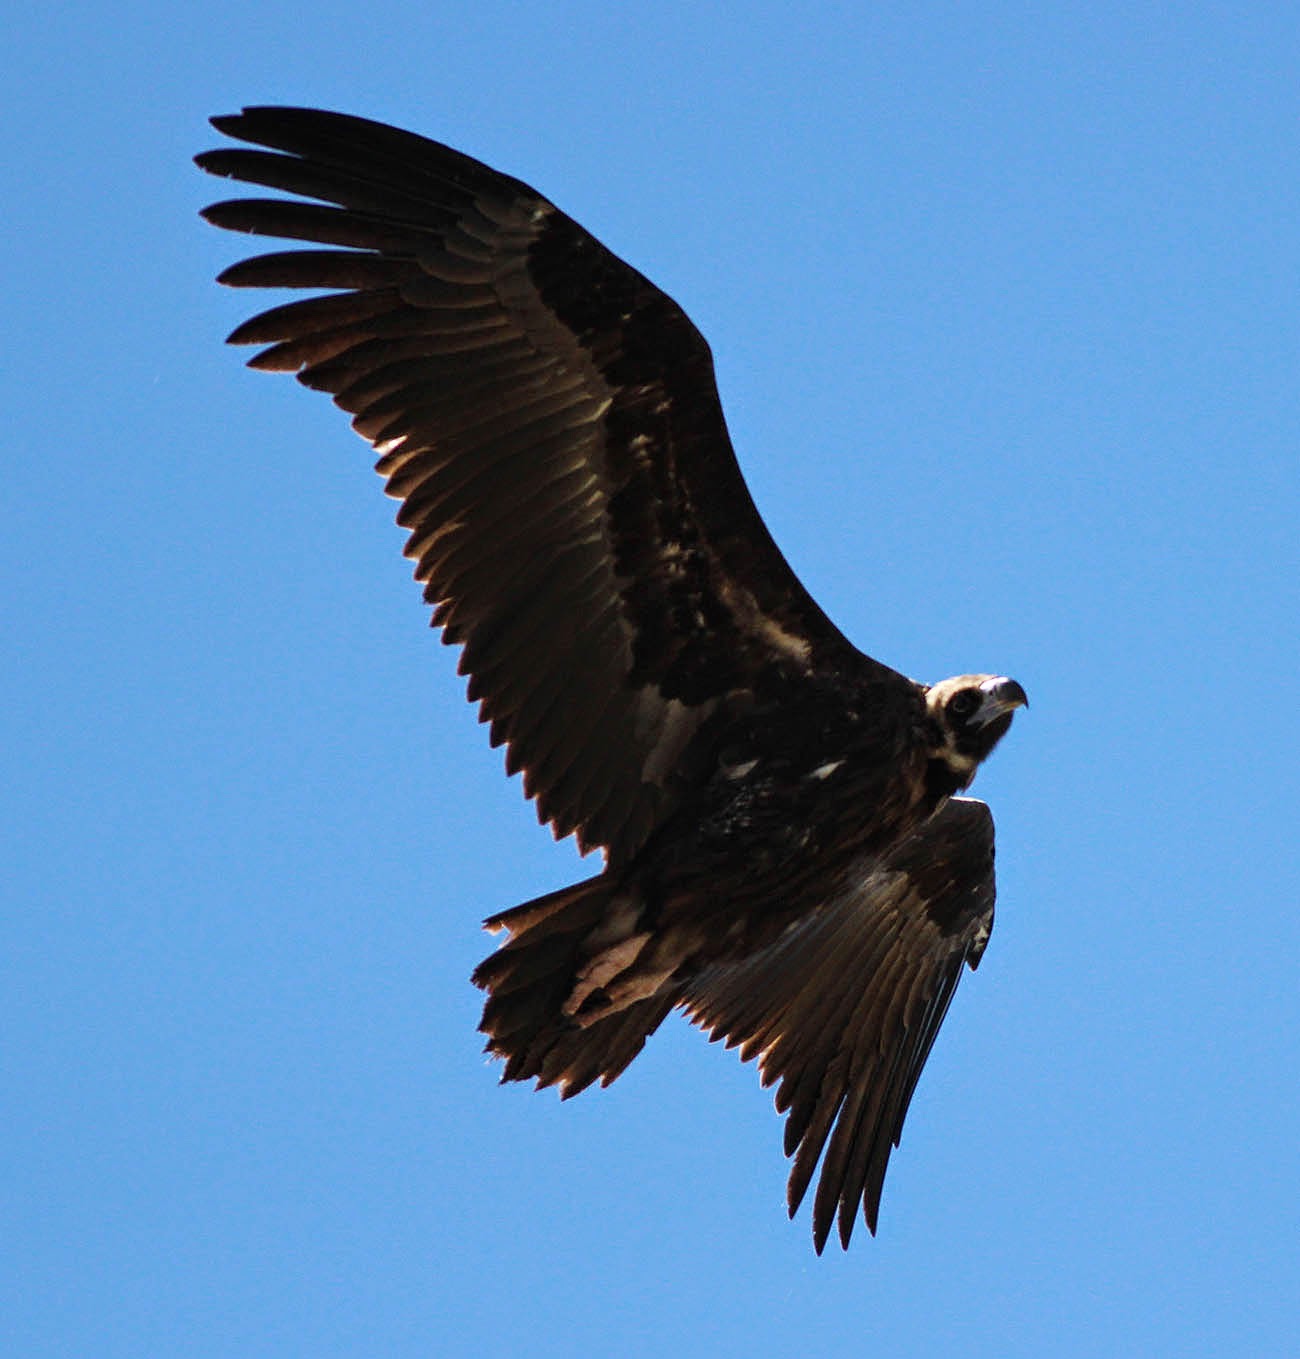 Birdwatching Algarve: Big birds of prey